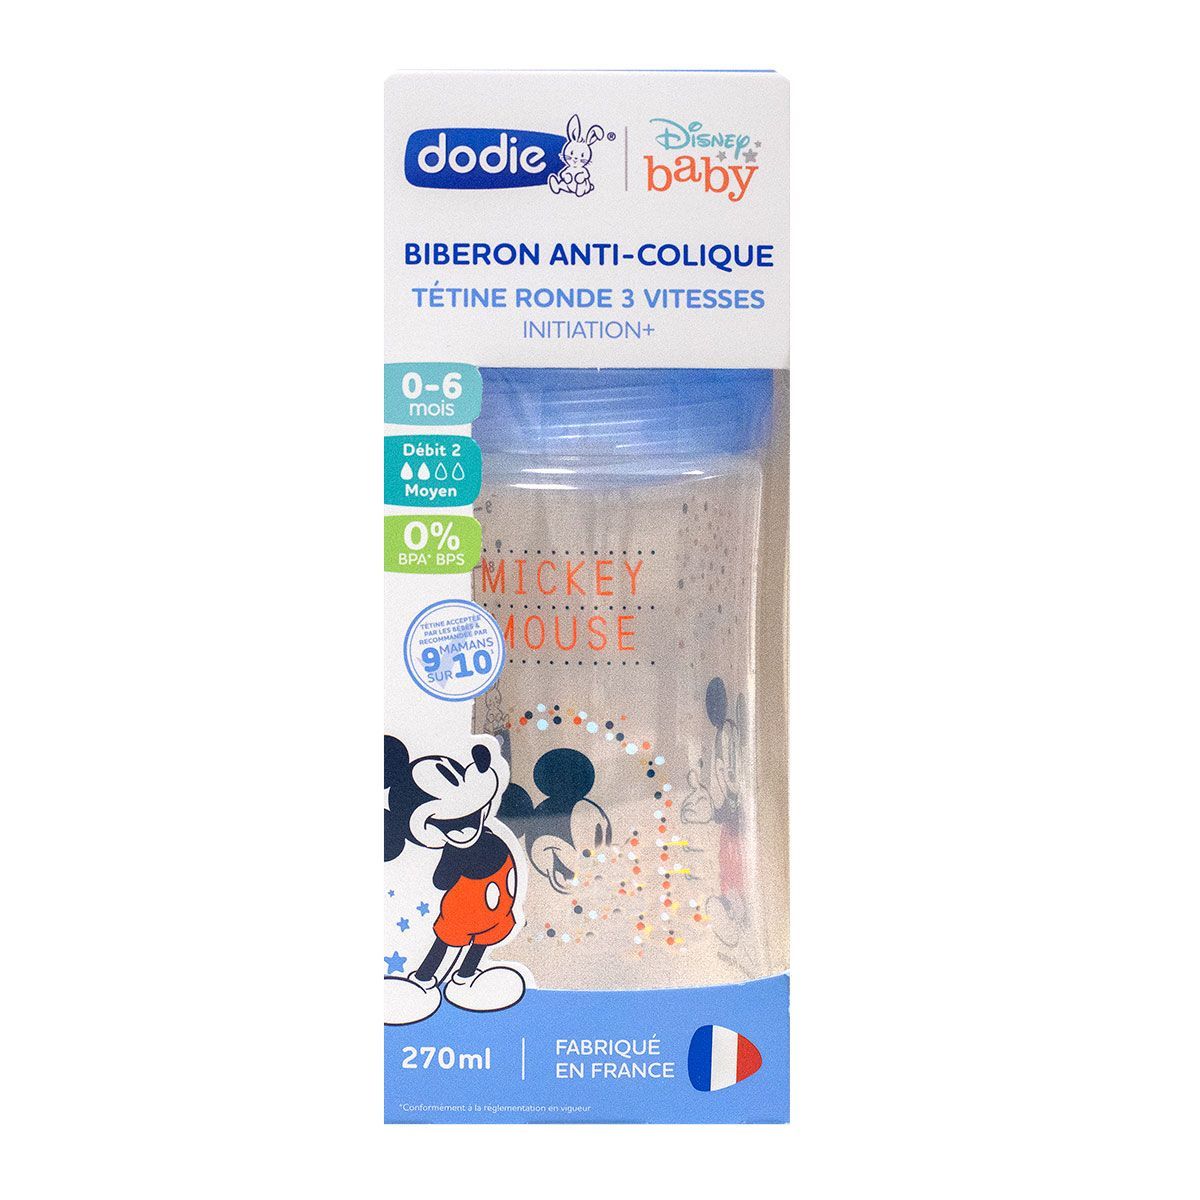 DODIE Biberon Anti-Colique Disney Baby 330ml - Confort et efficacité -  Pharma360